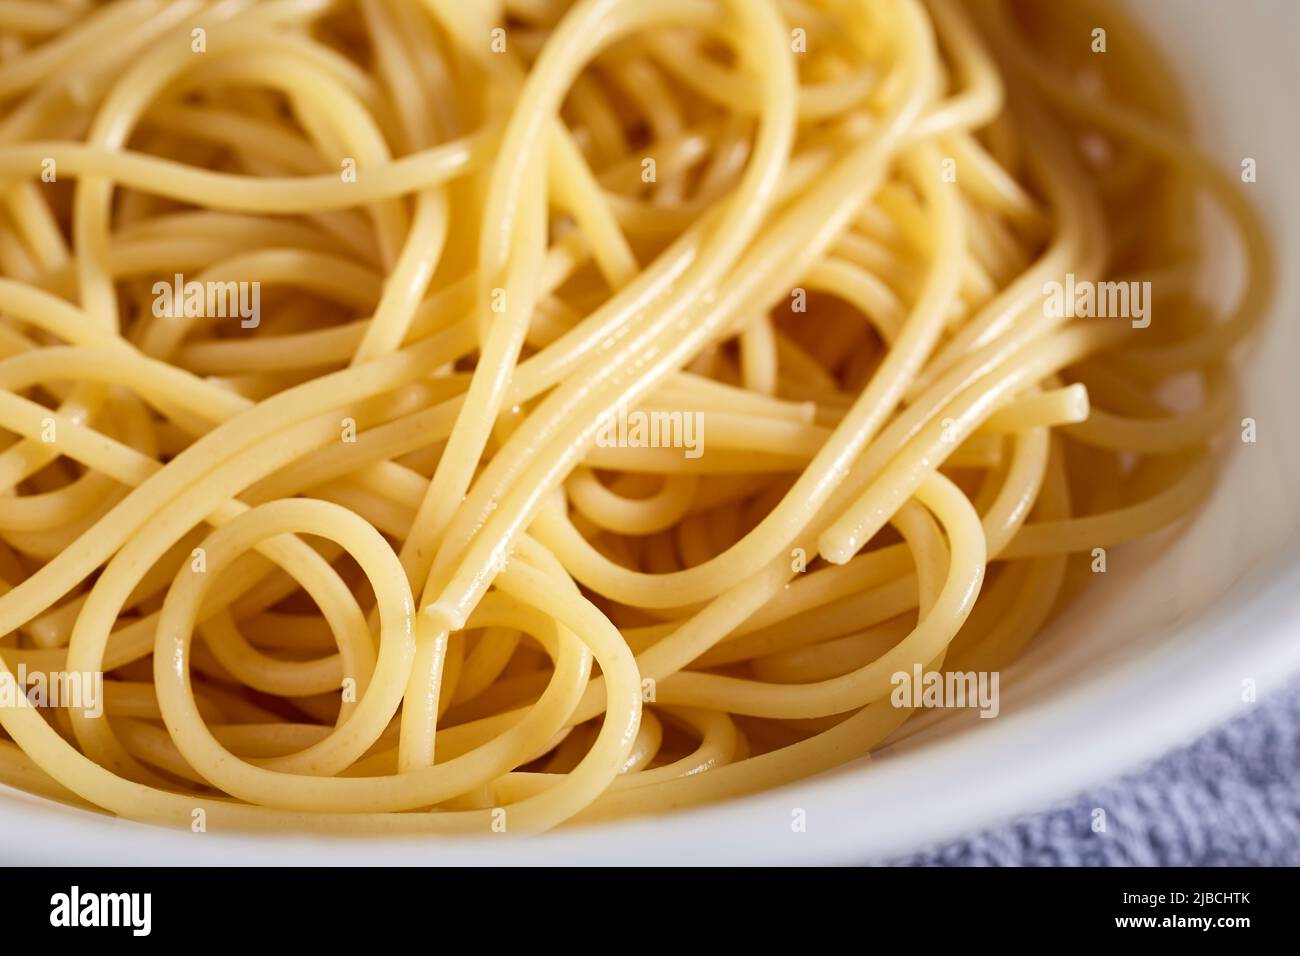 a bowl of cooked, unseasoned, plain spaghetti Stock Photo